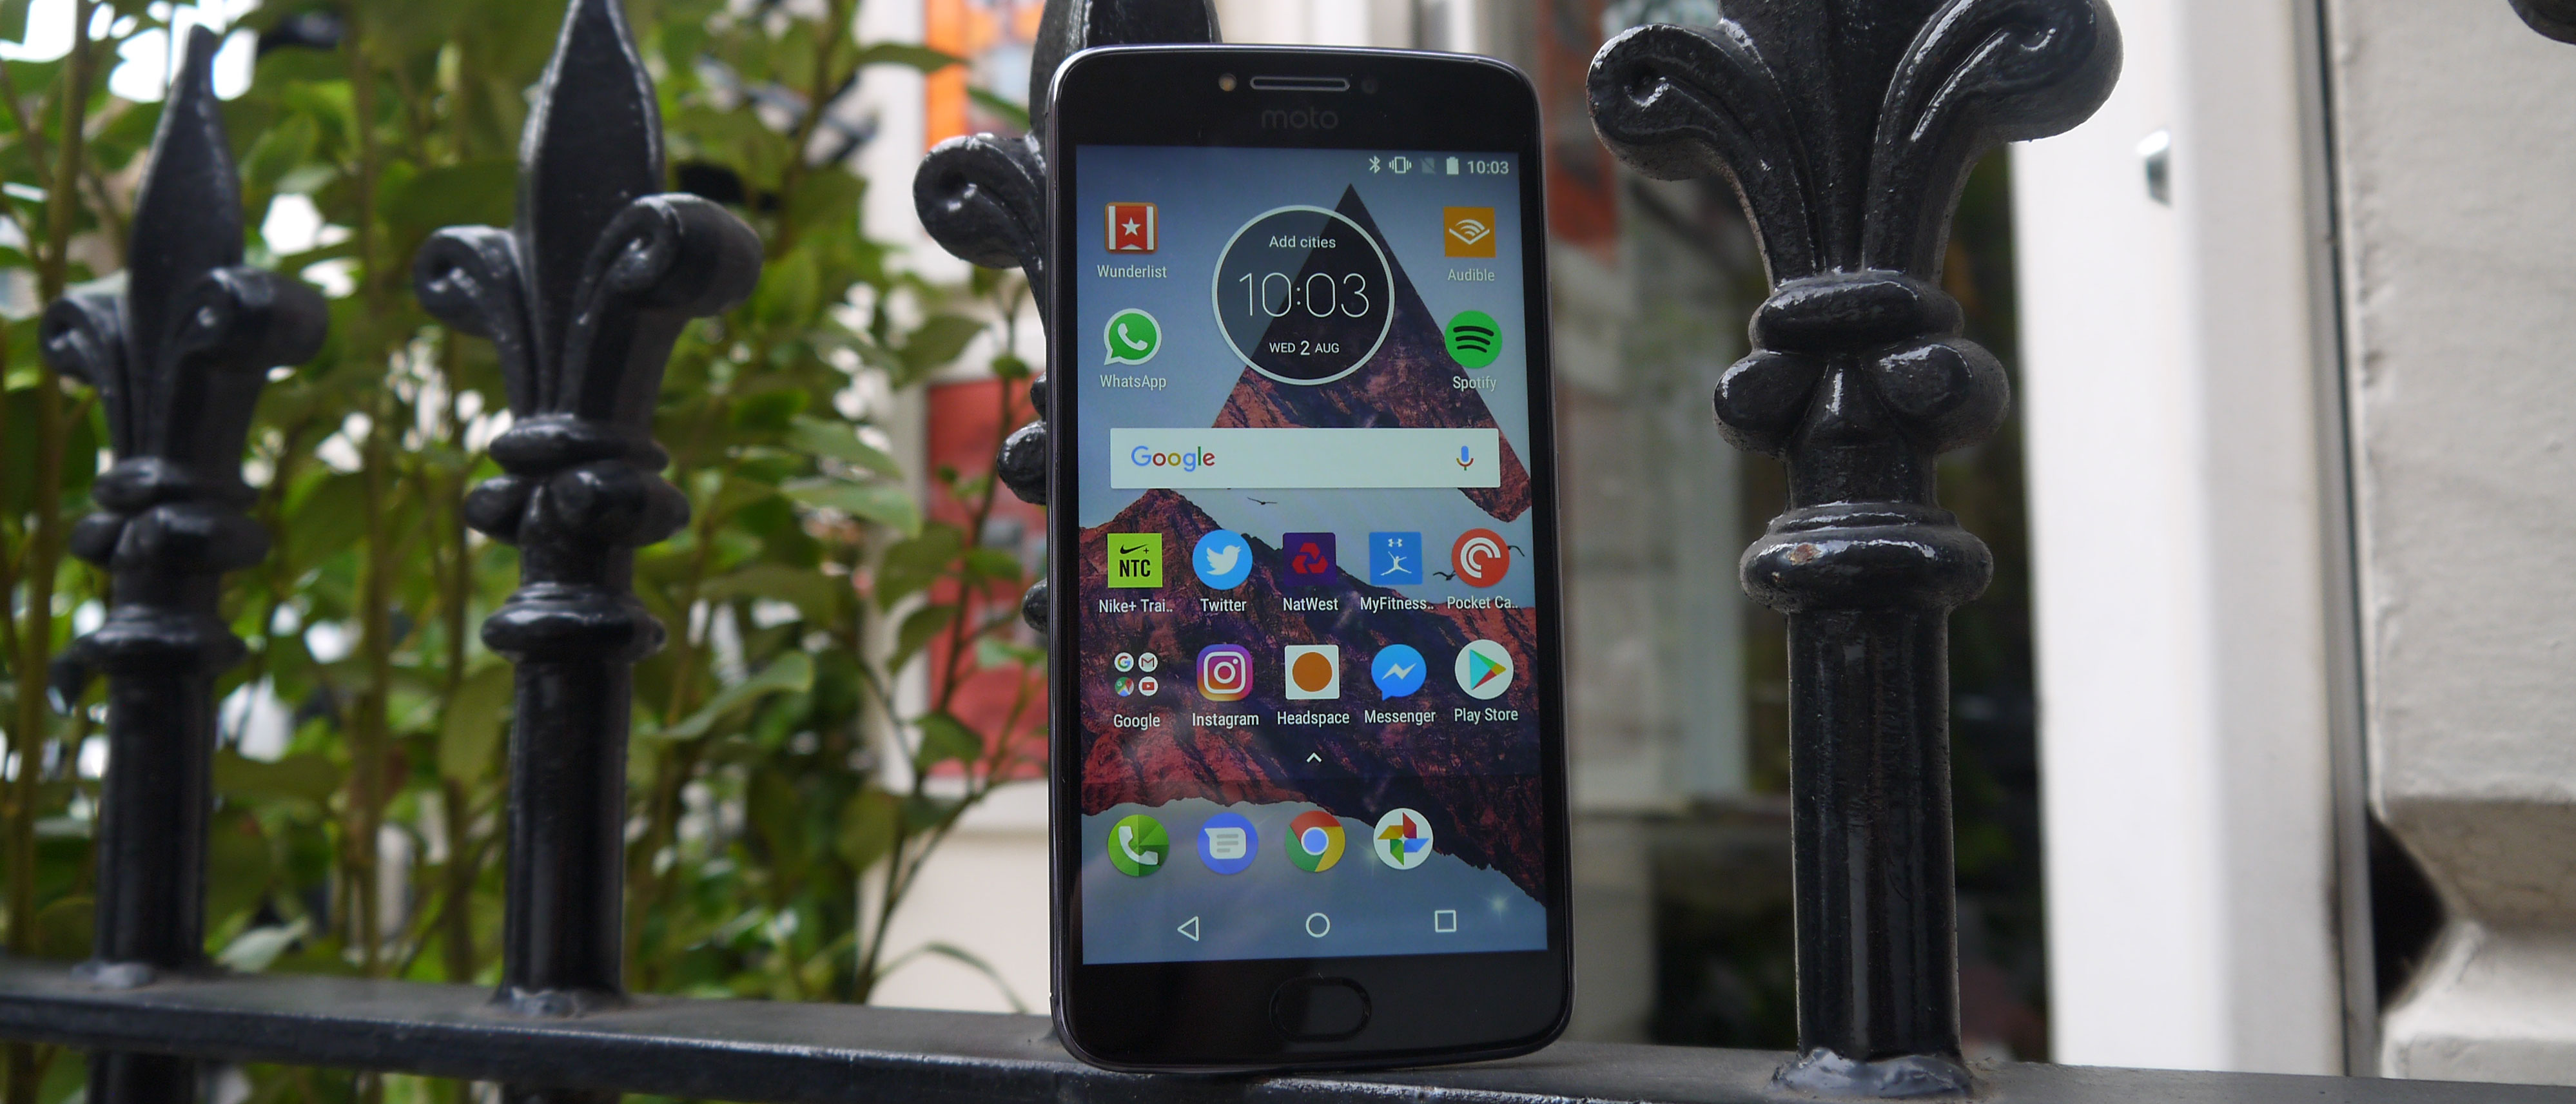 First look at the Motorola Moto E4 Plus